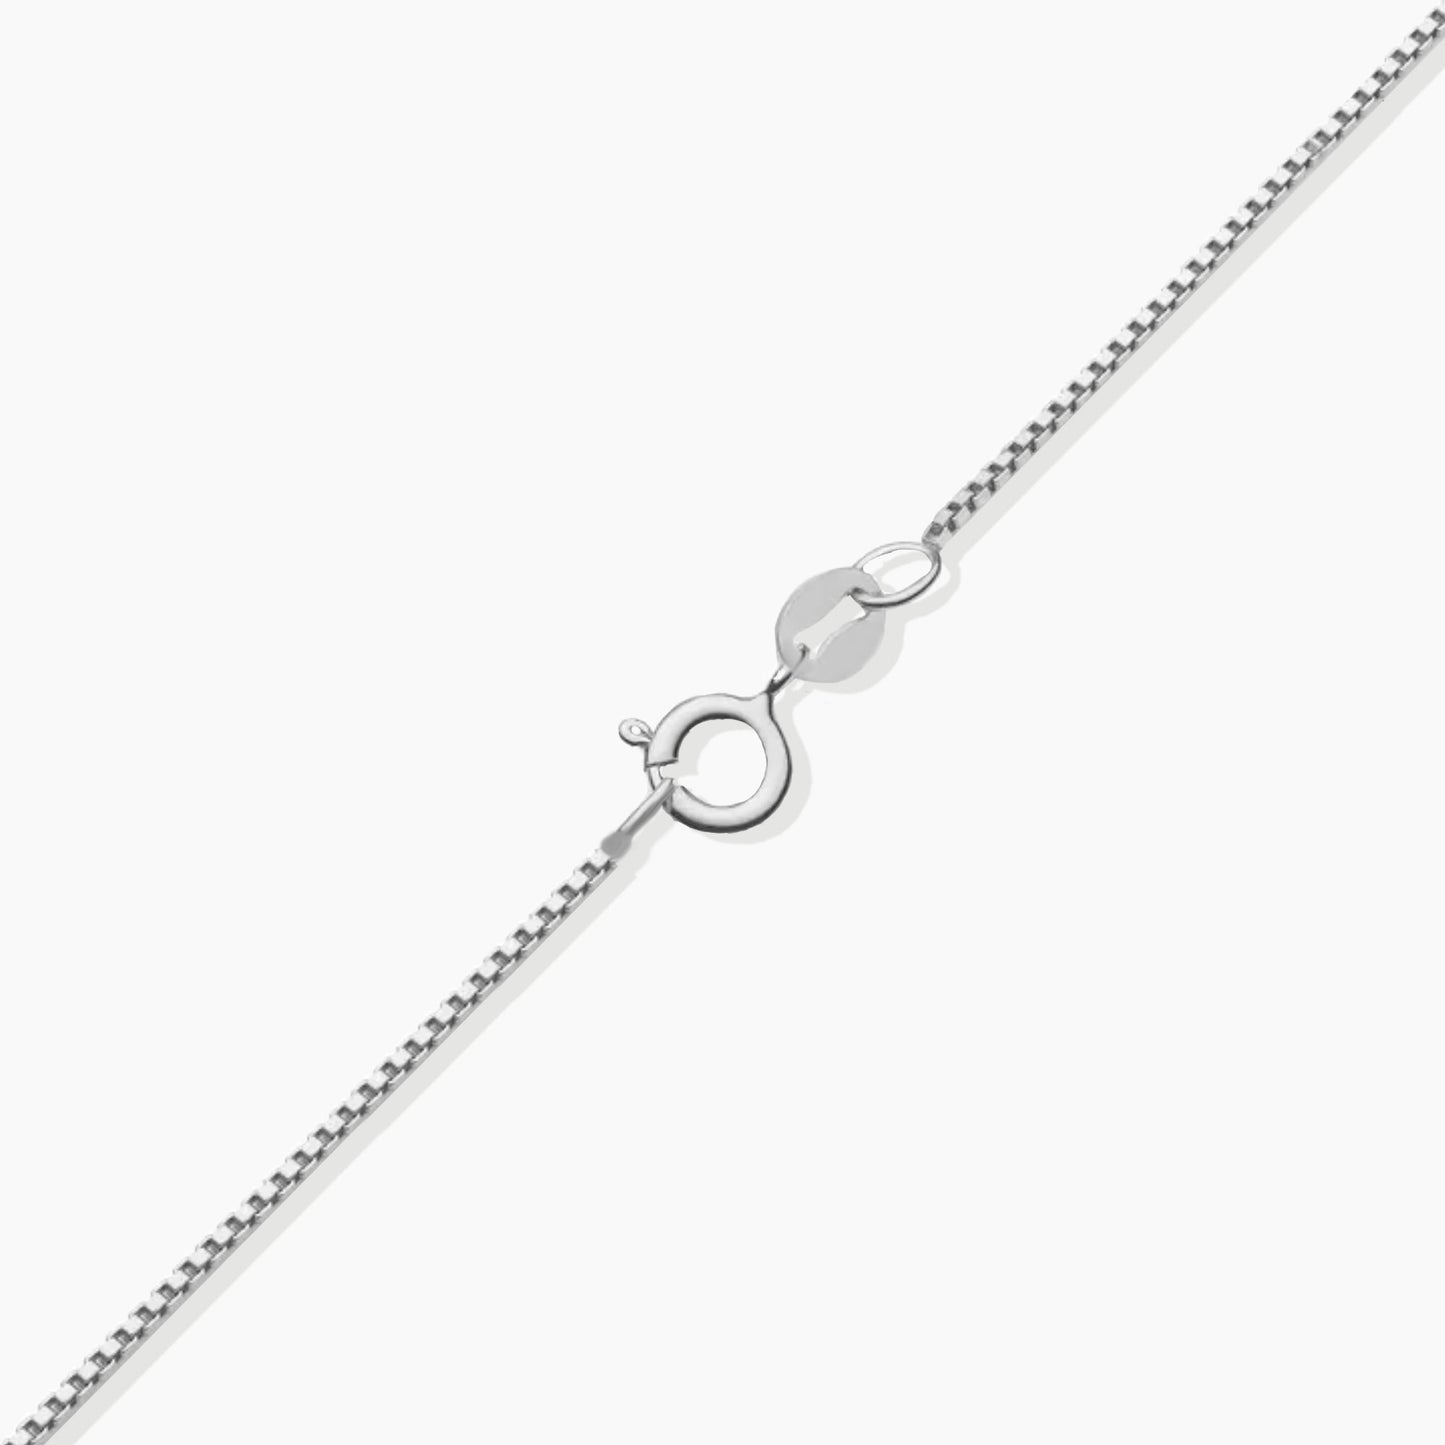 Garnet Rio Pendant Necklace in Sterling Silver